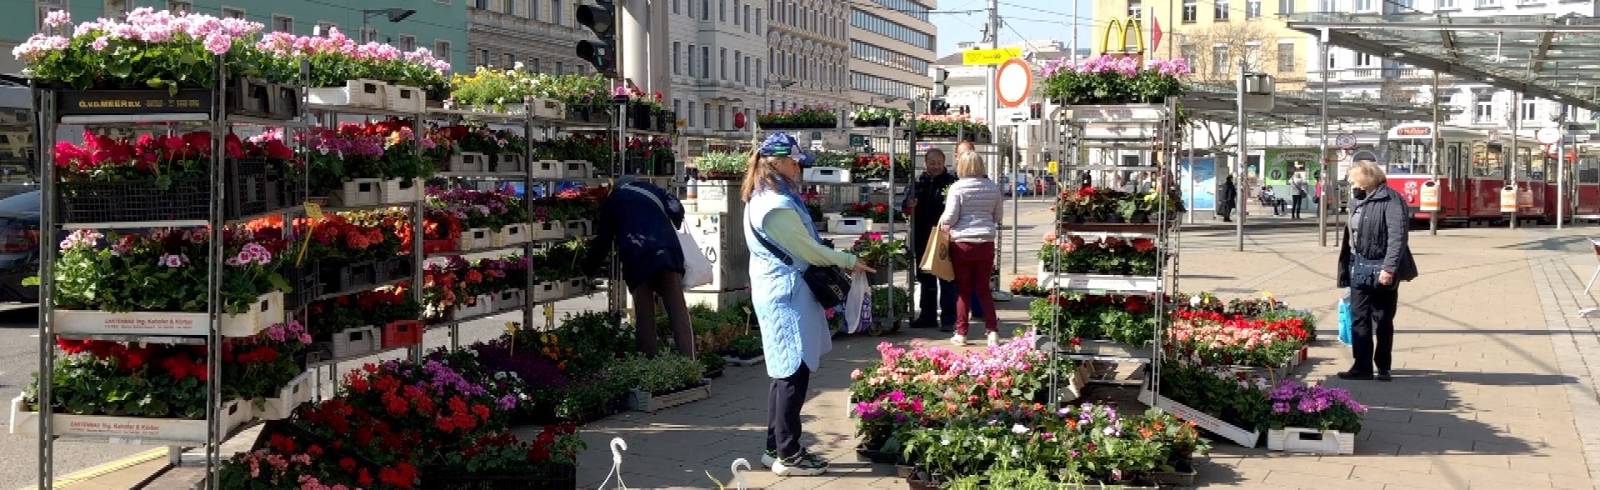 Blumenmärkte: Wien blüht auf